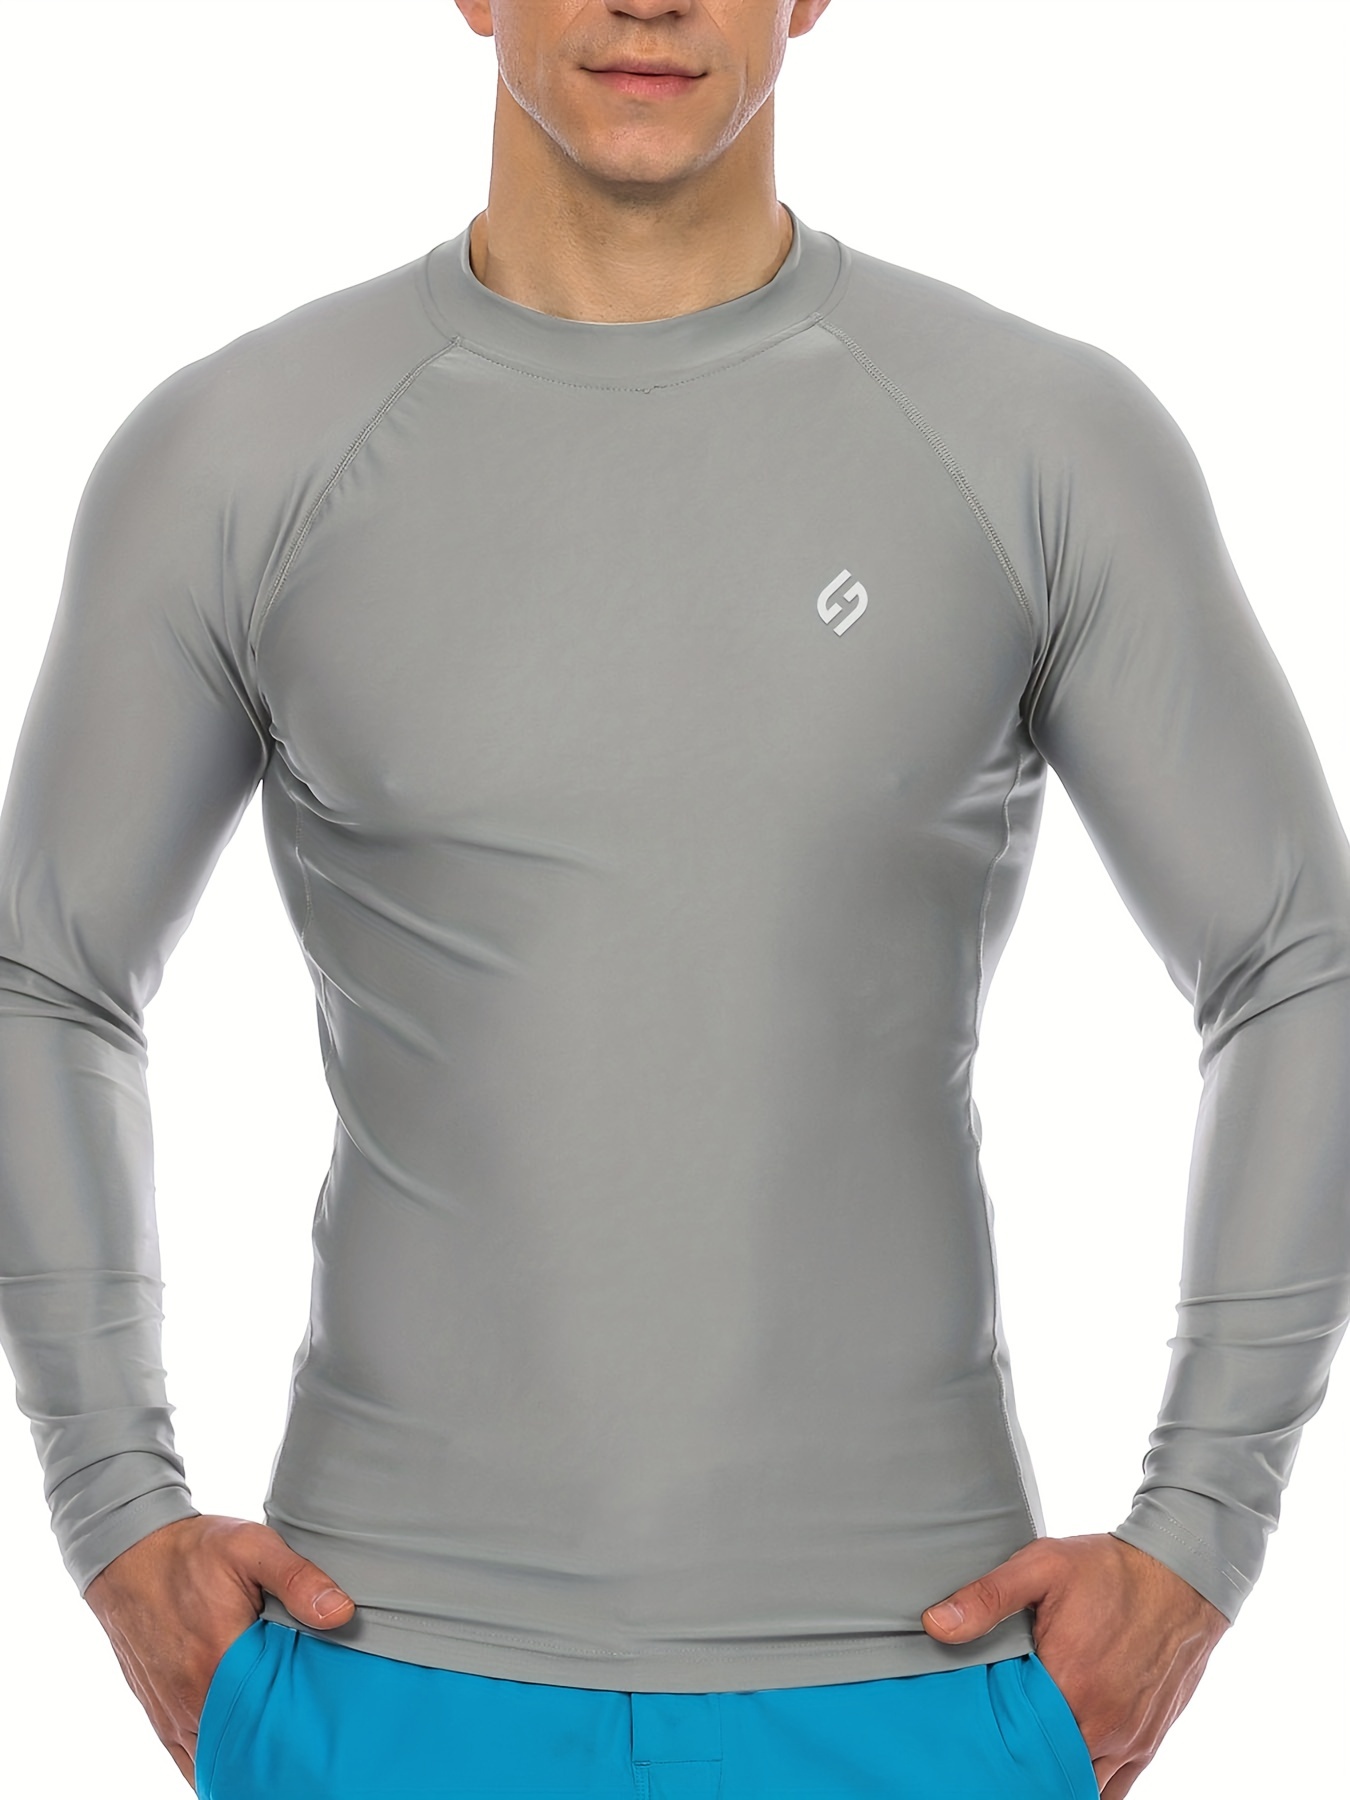 Fishing Shirts Men's Quick Dry Lightweight UPF 50+ Long Sleeve Shirts Rash  Guard Swim Shirts Hiking Shirts Moisture Wicking